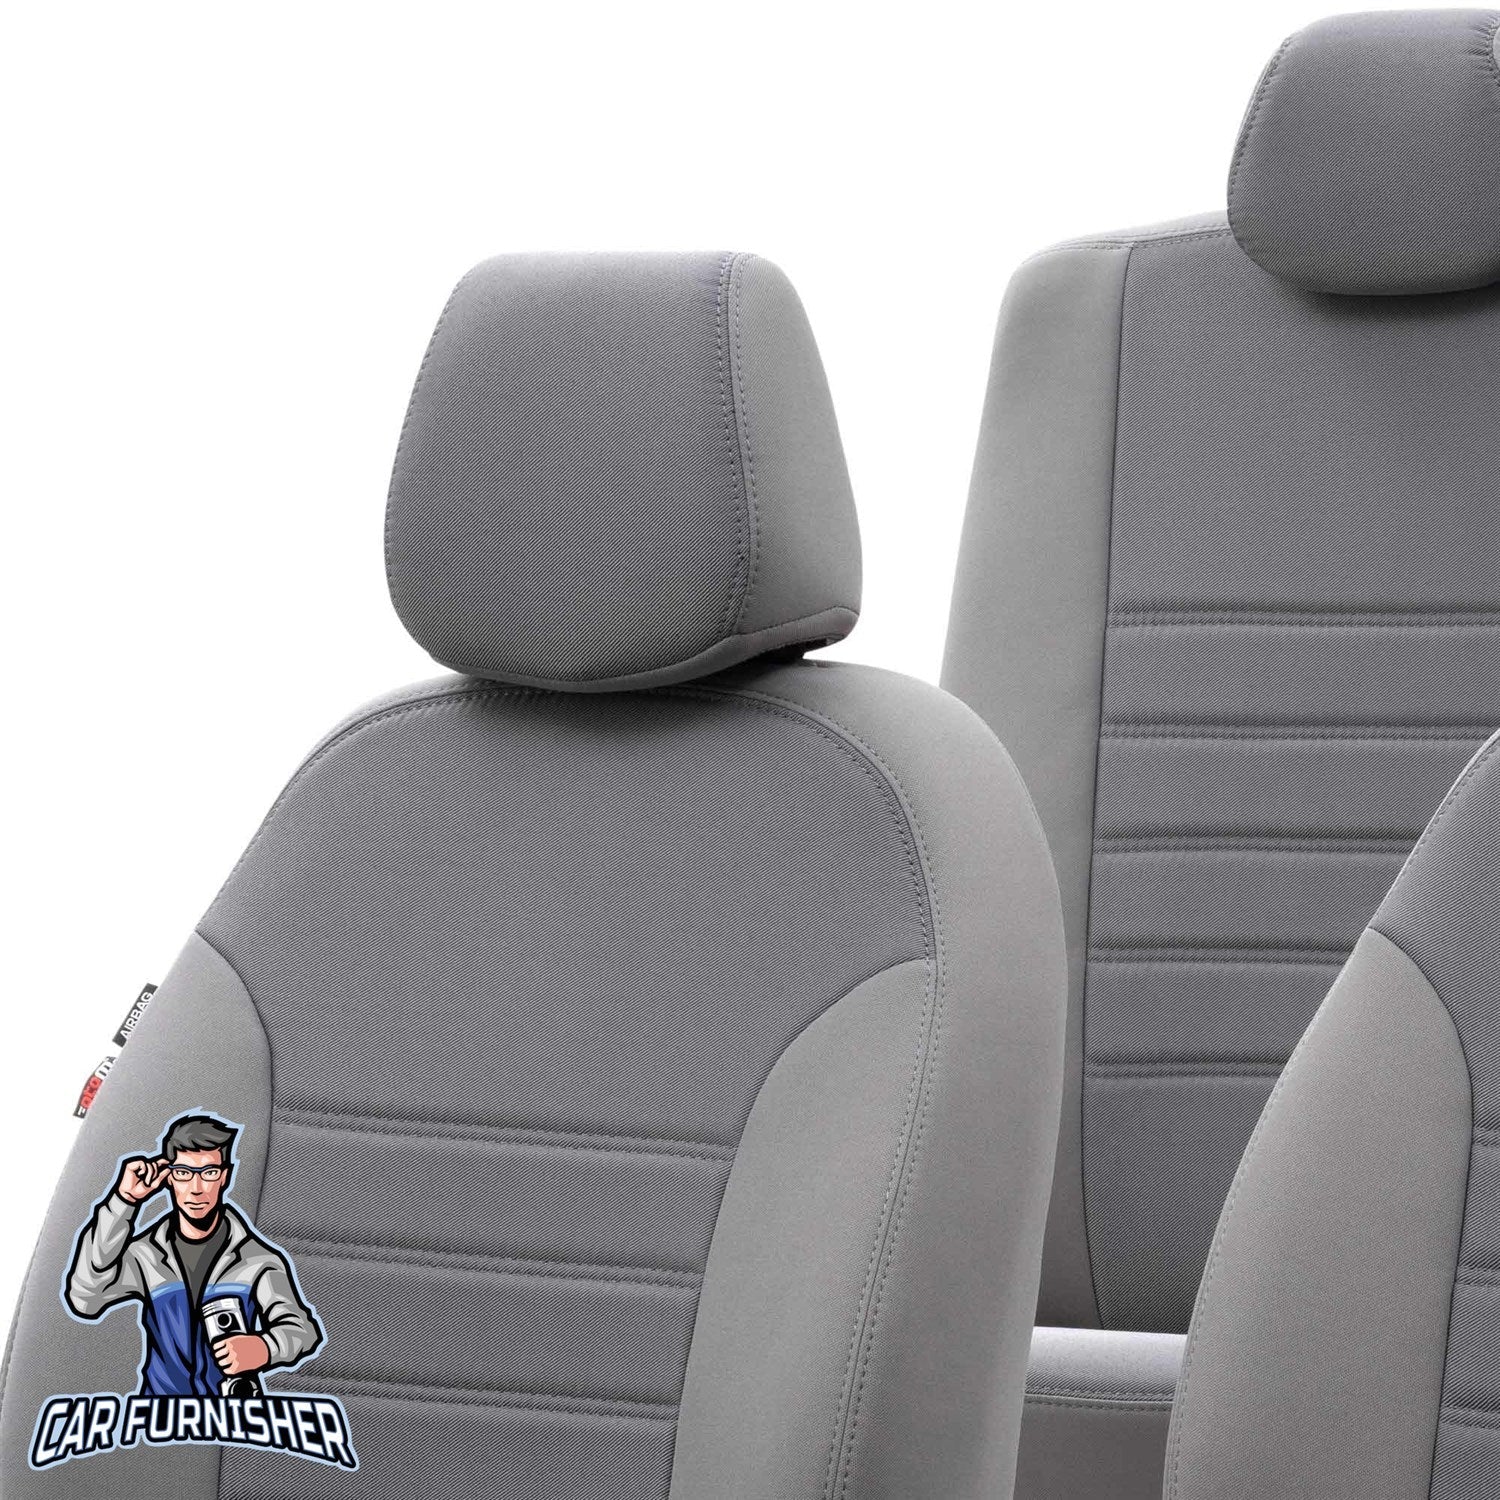 Man TGE Seat Covers Original Jacquard Design Gray Jacquard Fabric